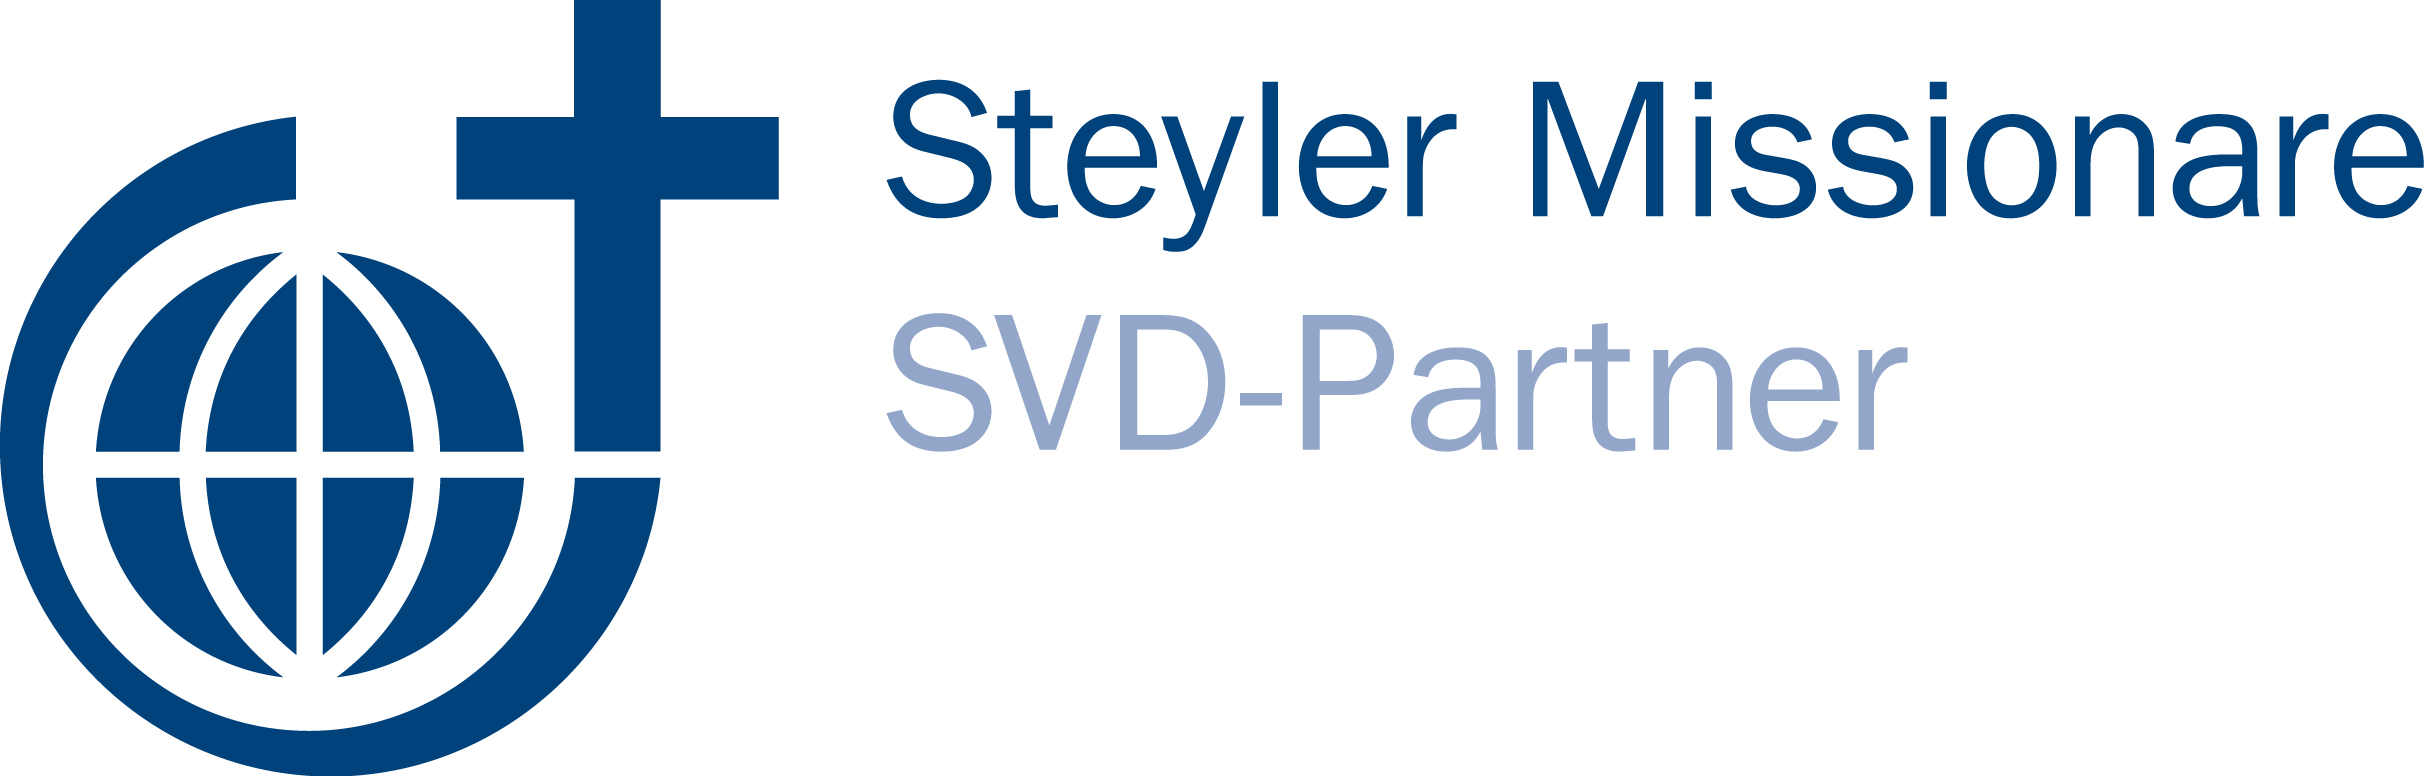 SVD-Partner - Germany